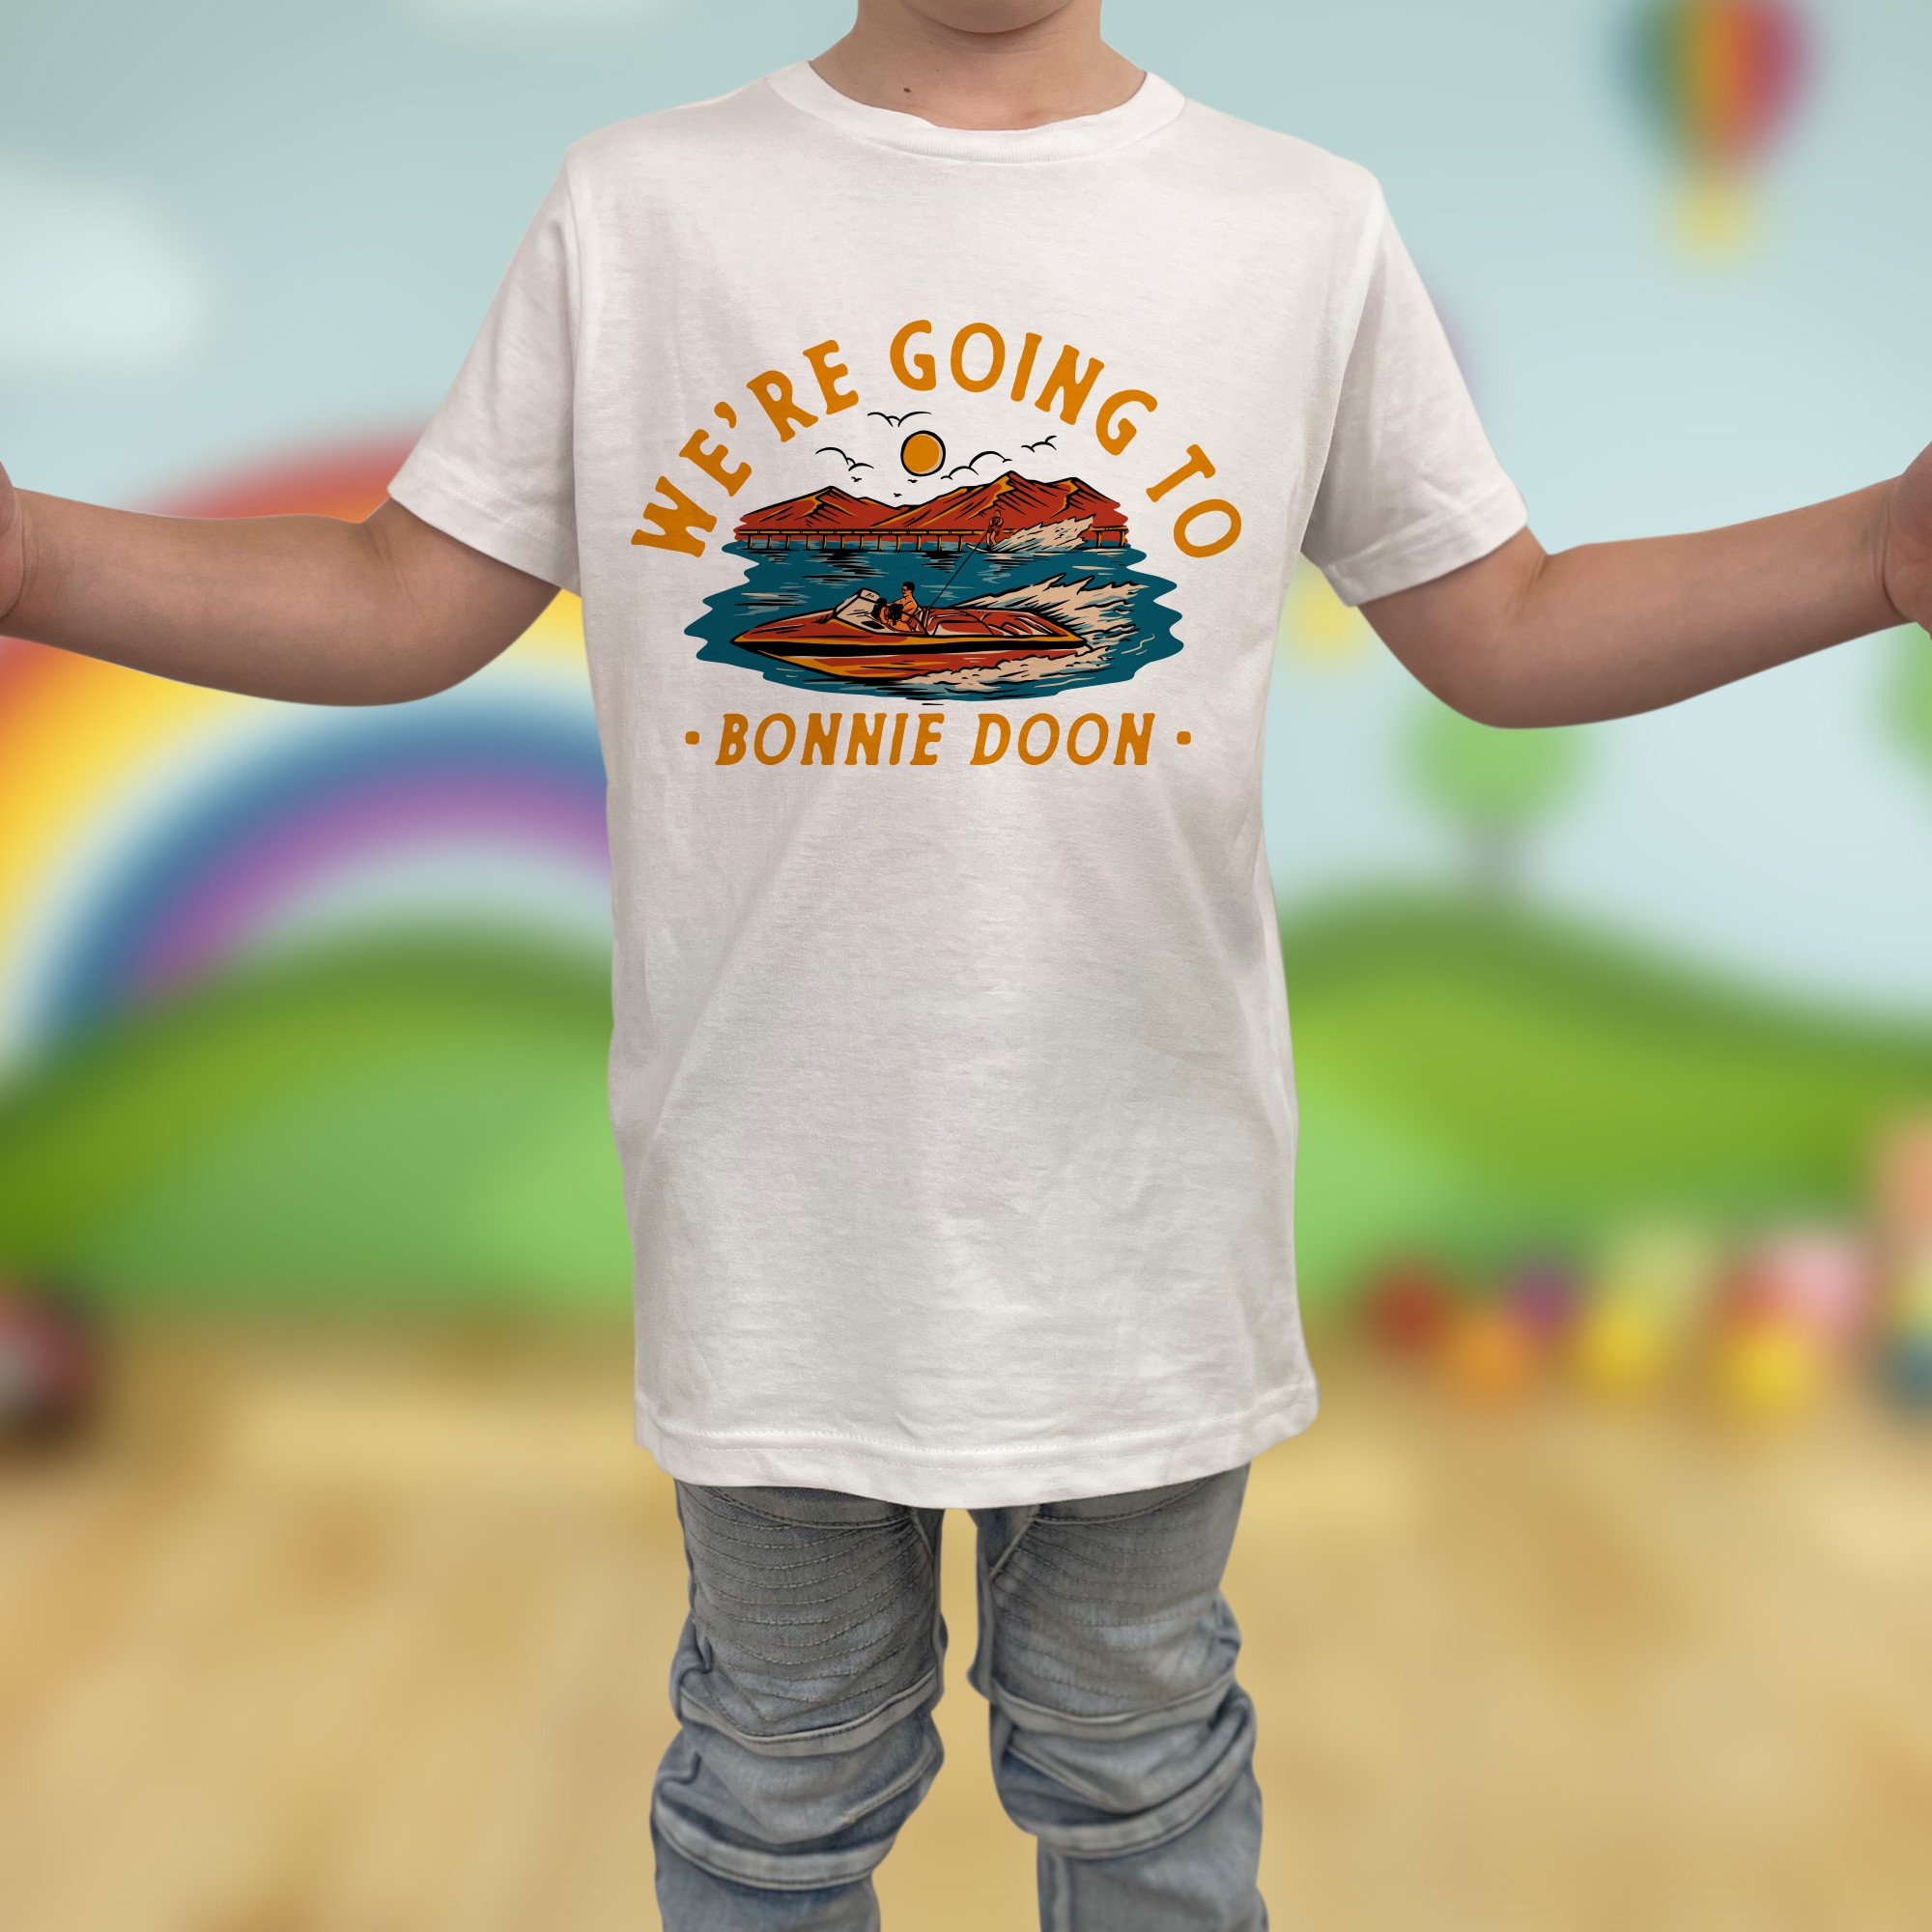 BONNIE DOON KIDS TEE, Bonnie Doon Kids T-Shirt